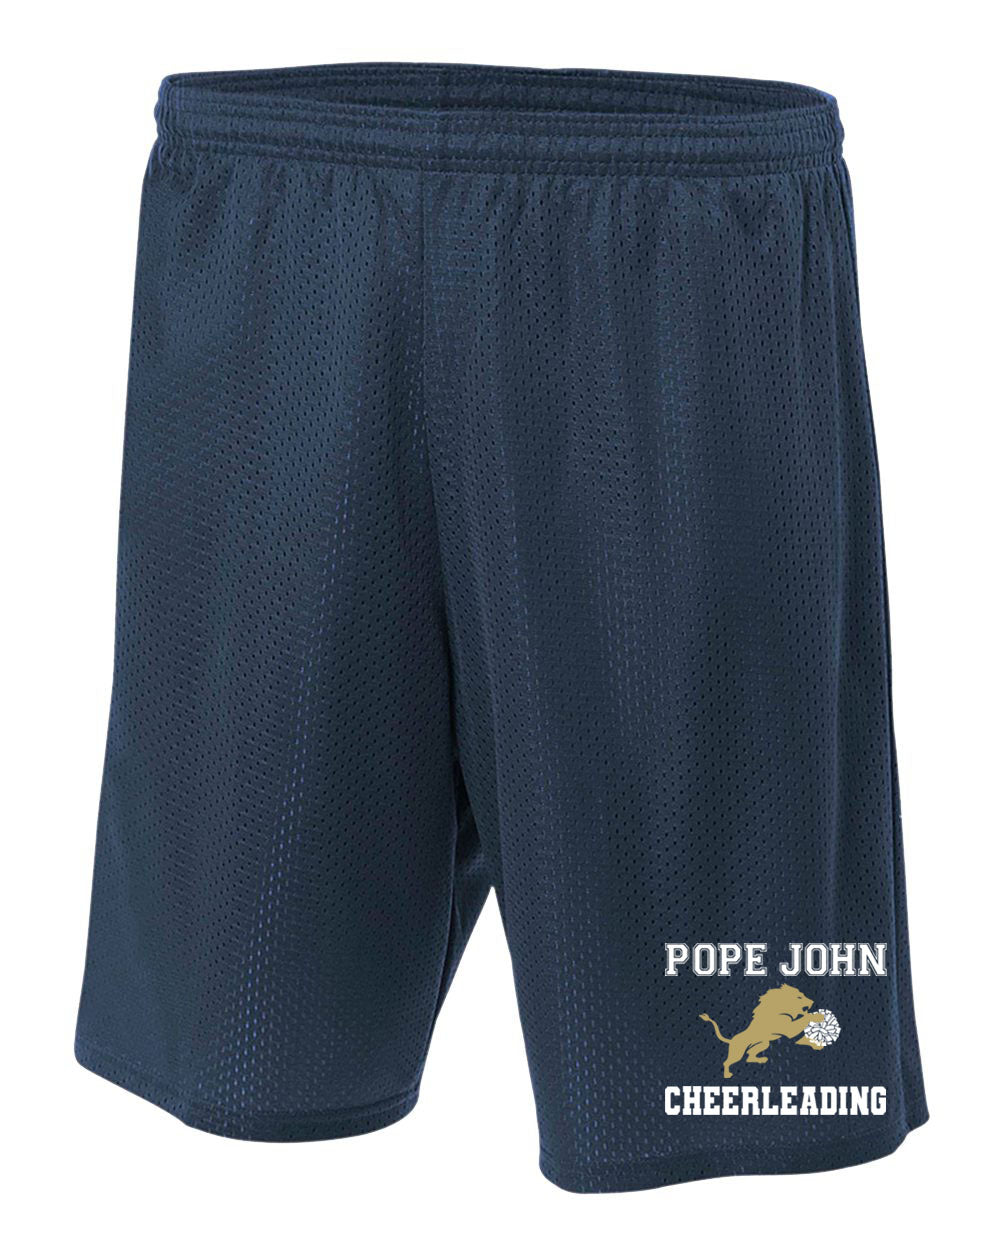 Pope John Cheer Design 1 Mesh Shorts